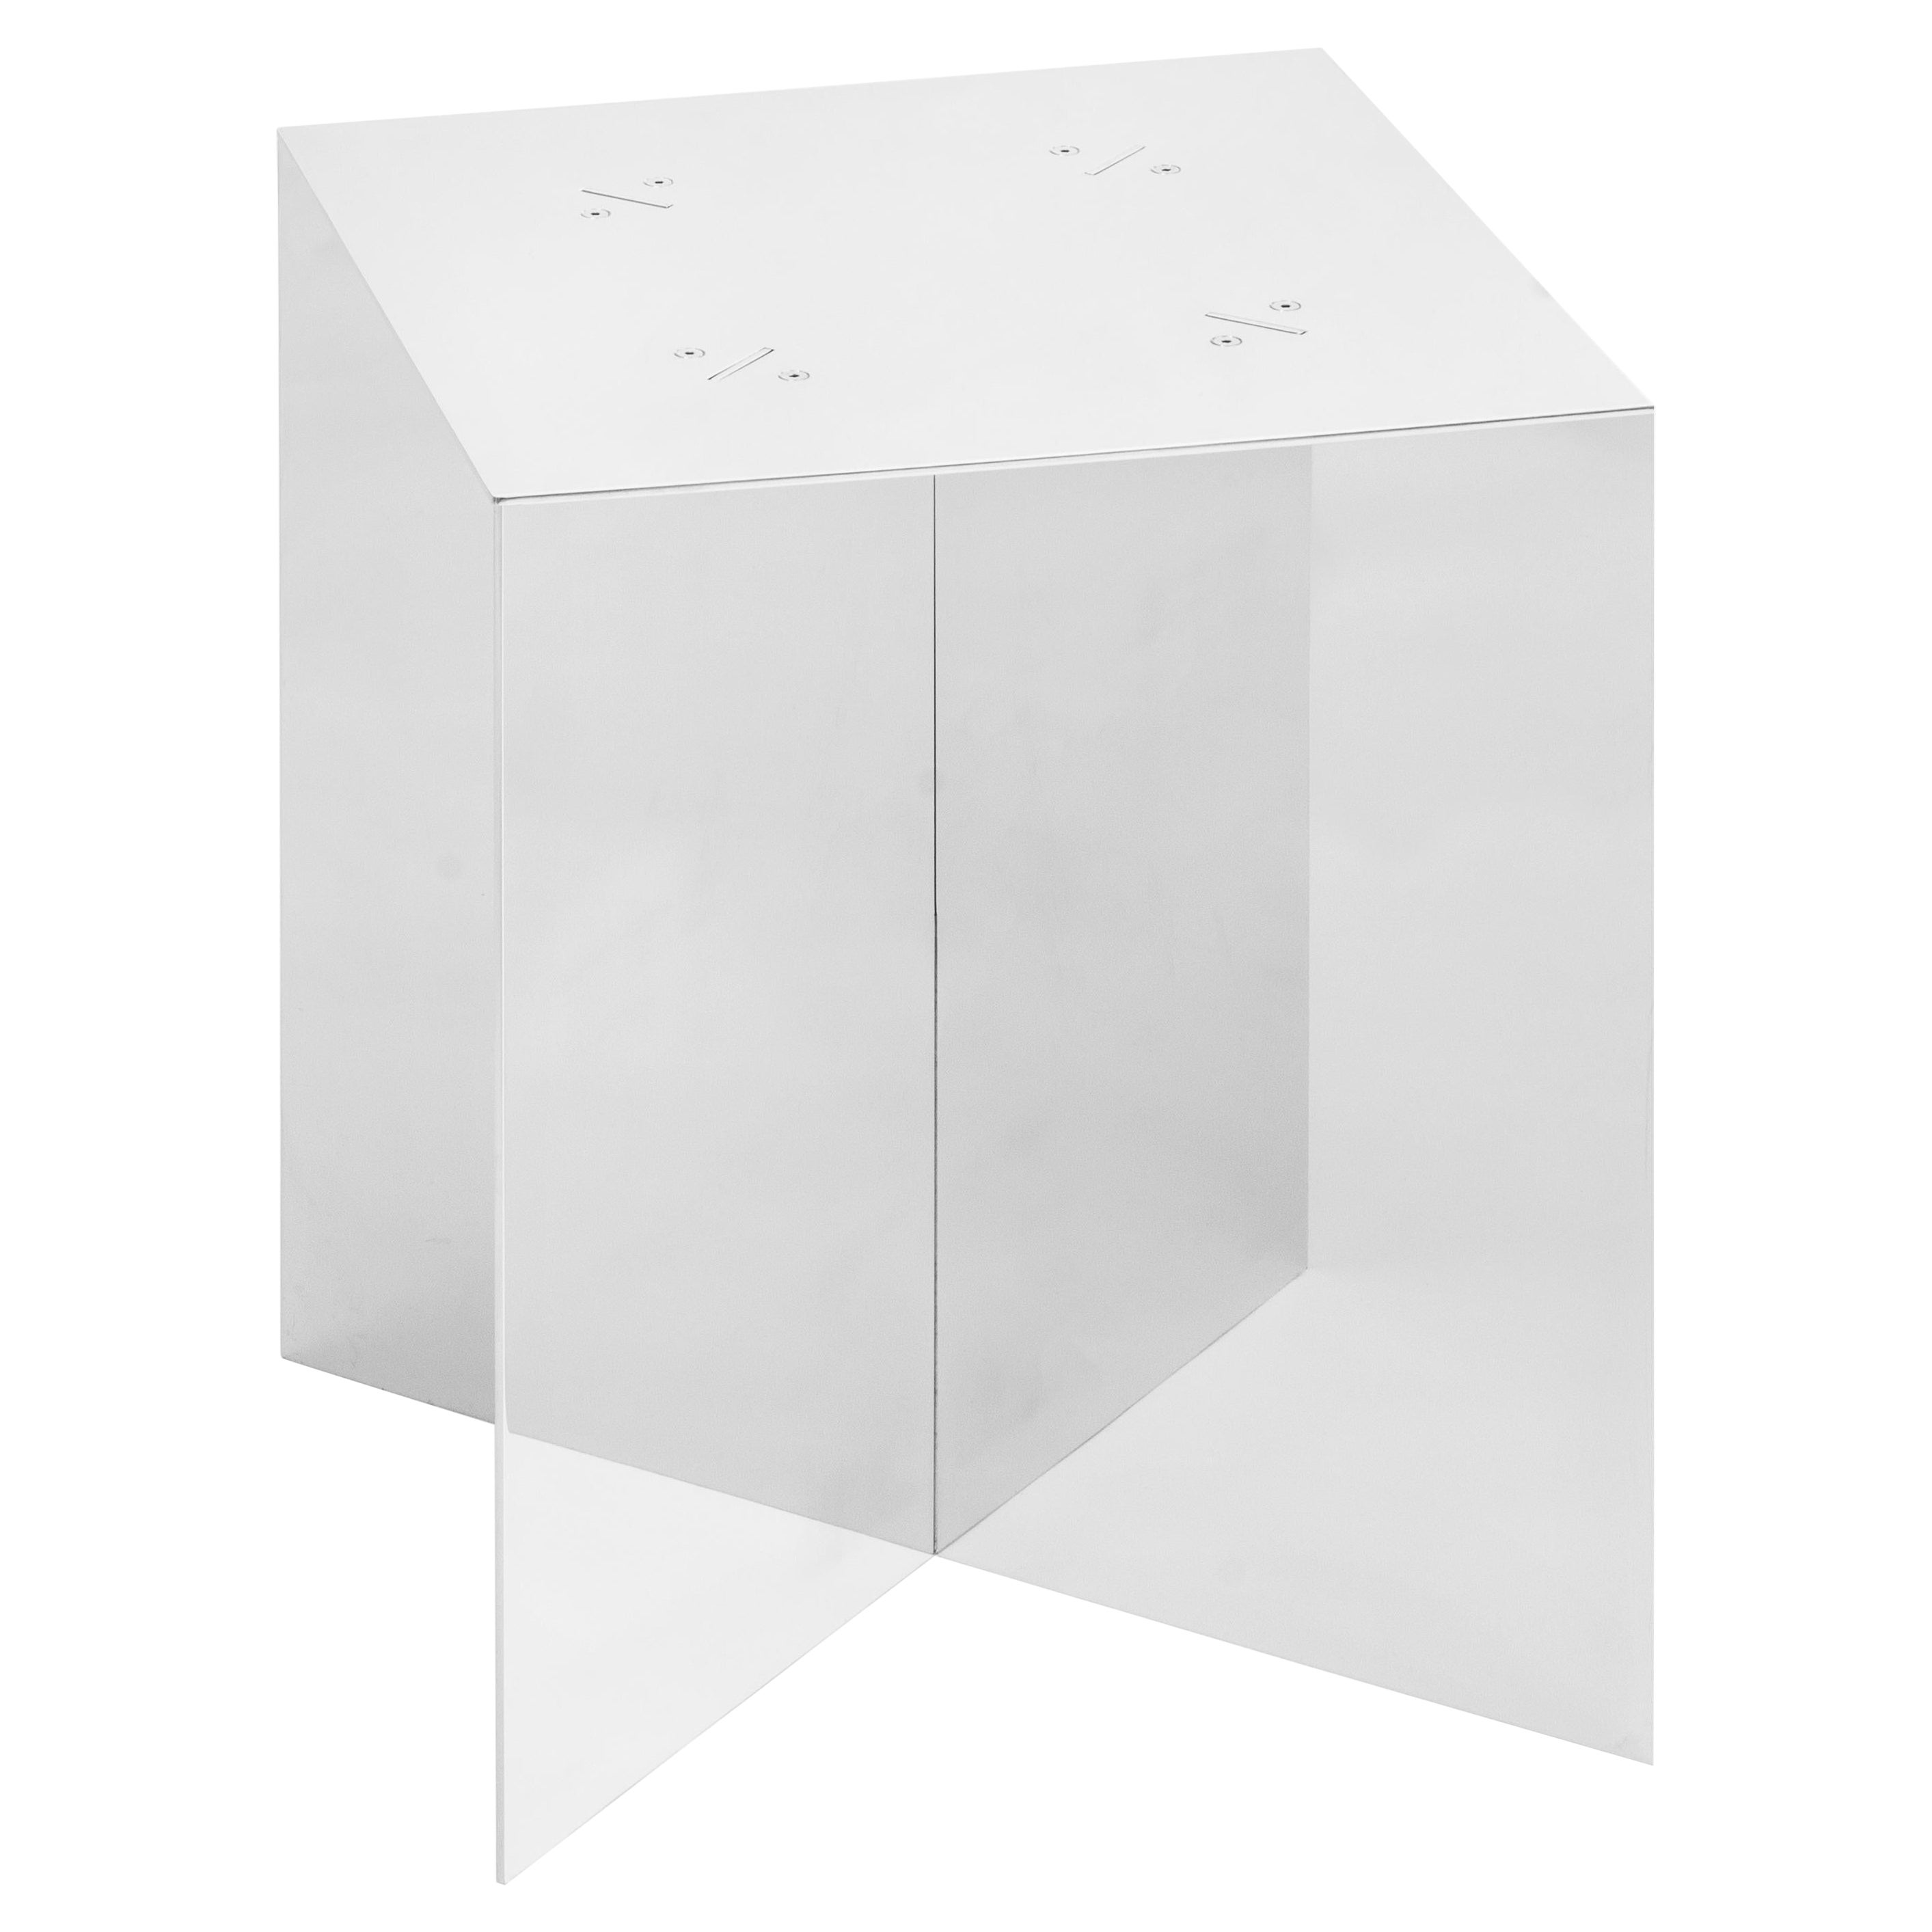 NM07 stainless steel stool & podium